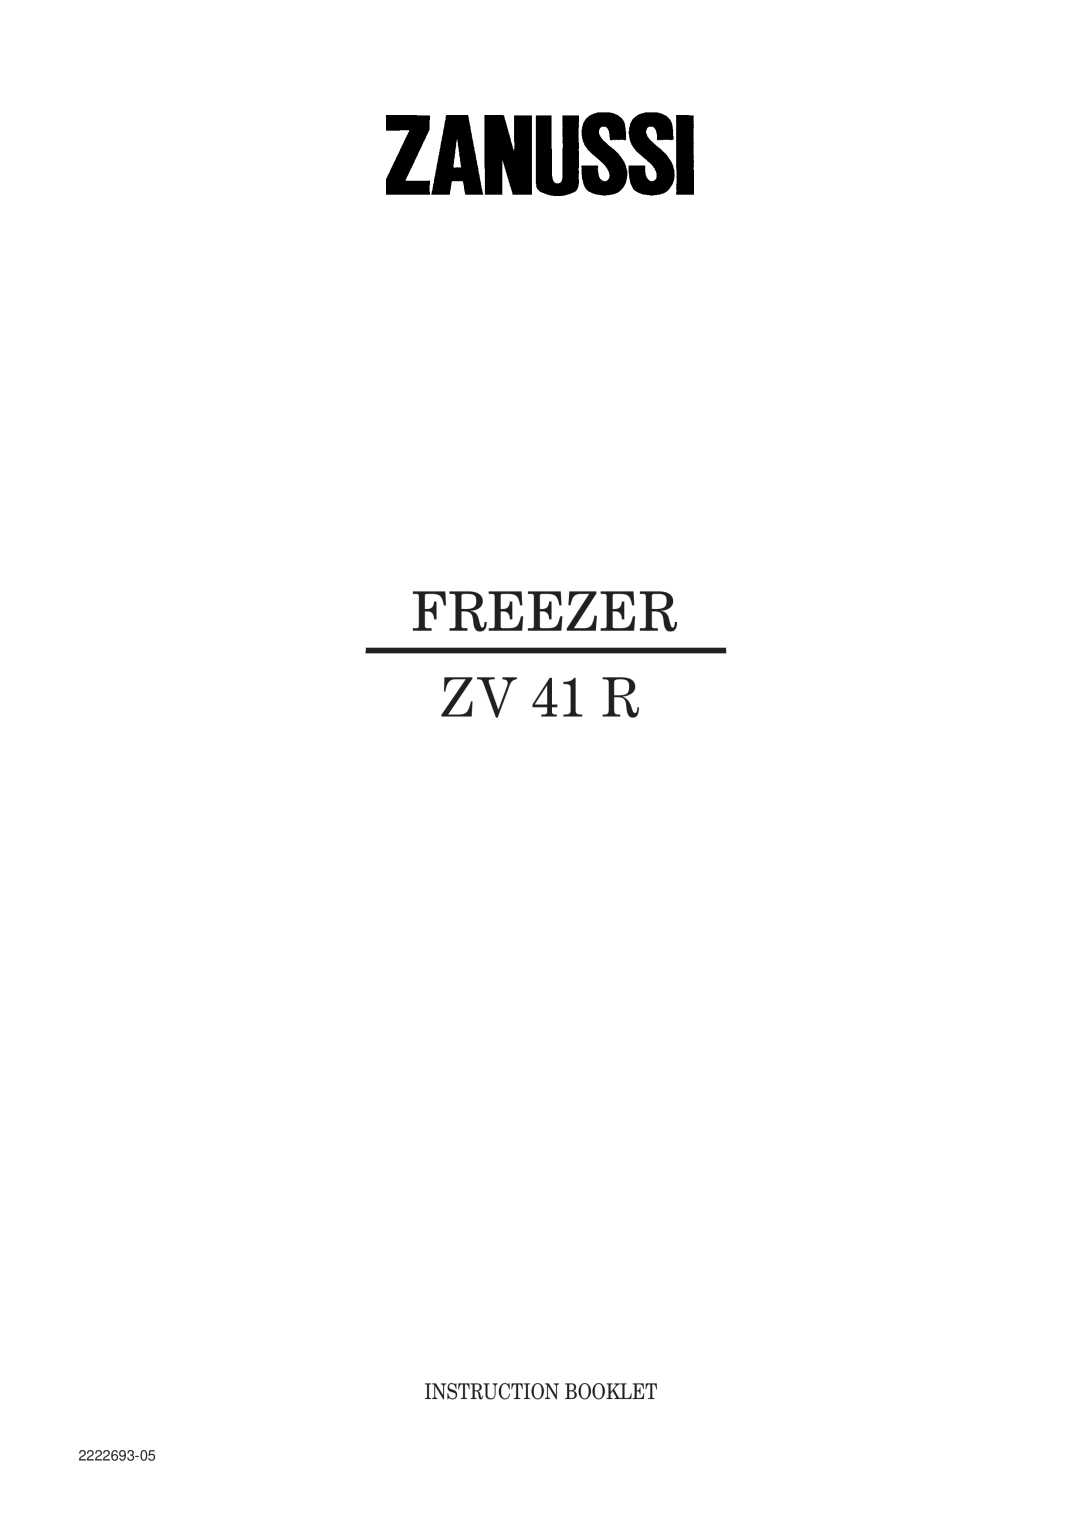 Zanussi manual FREEZER ZV 41 R, Instruction Booklet, 2222693-05 